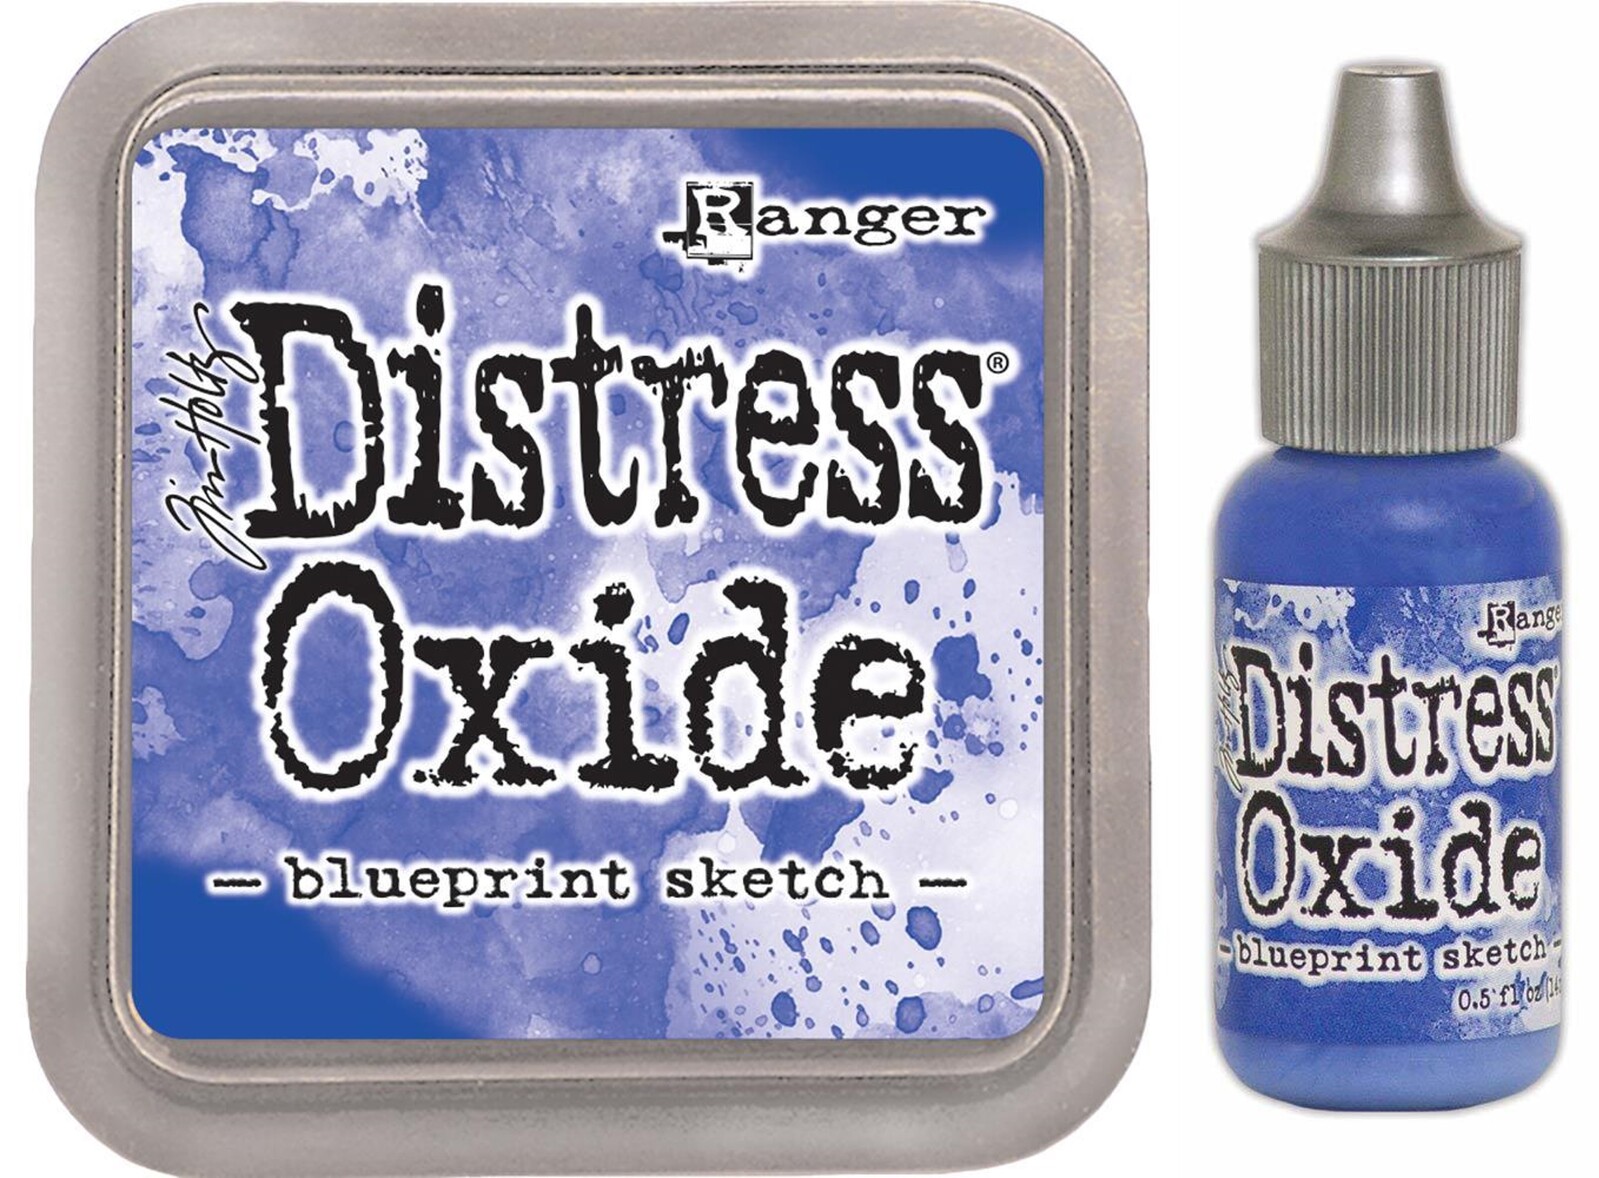 Tim Holtz Distress Oxide Ink Pad + Reinker Blueprint Sketch